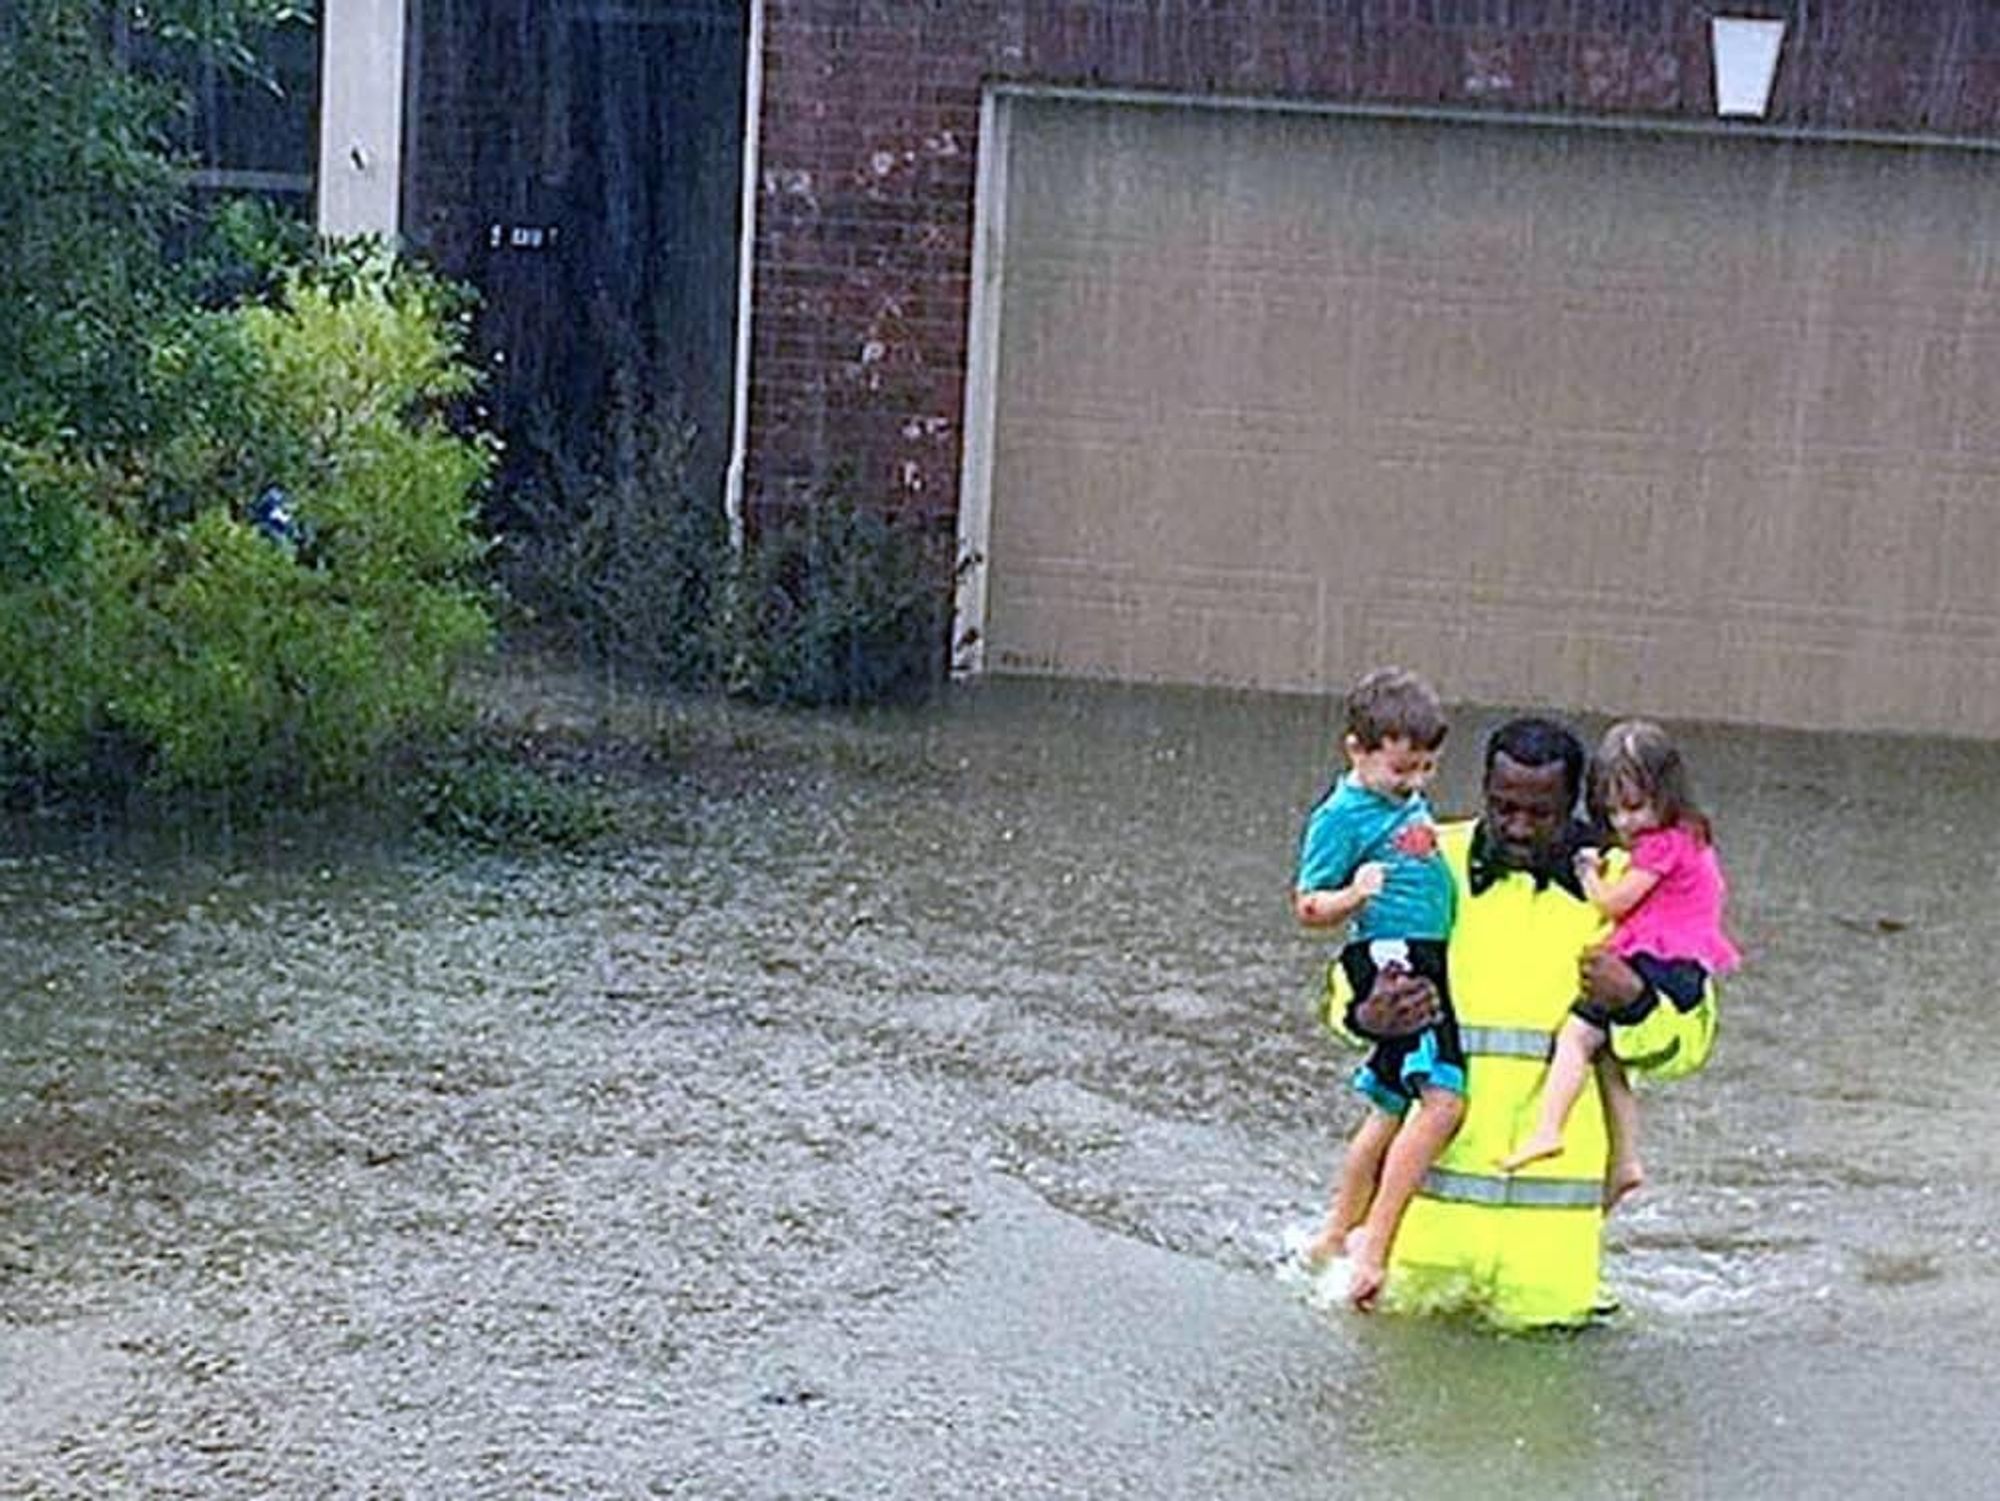 Houston, Hurricane Harvey, flood photos, Houstonians are resilient